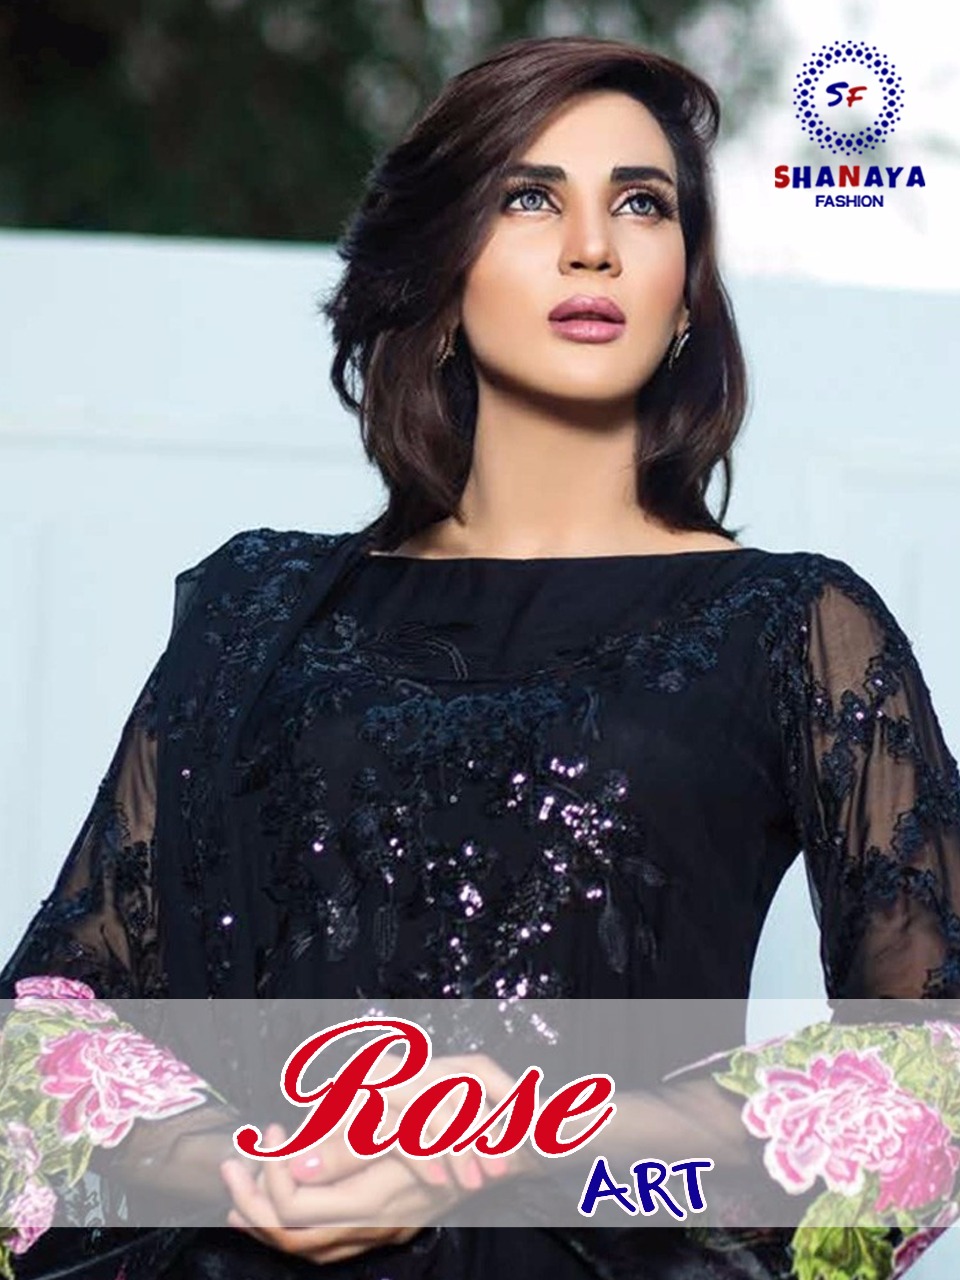 Shanaya fashion presents Rose art fancy collection of salwar kameez